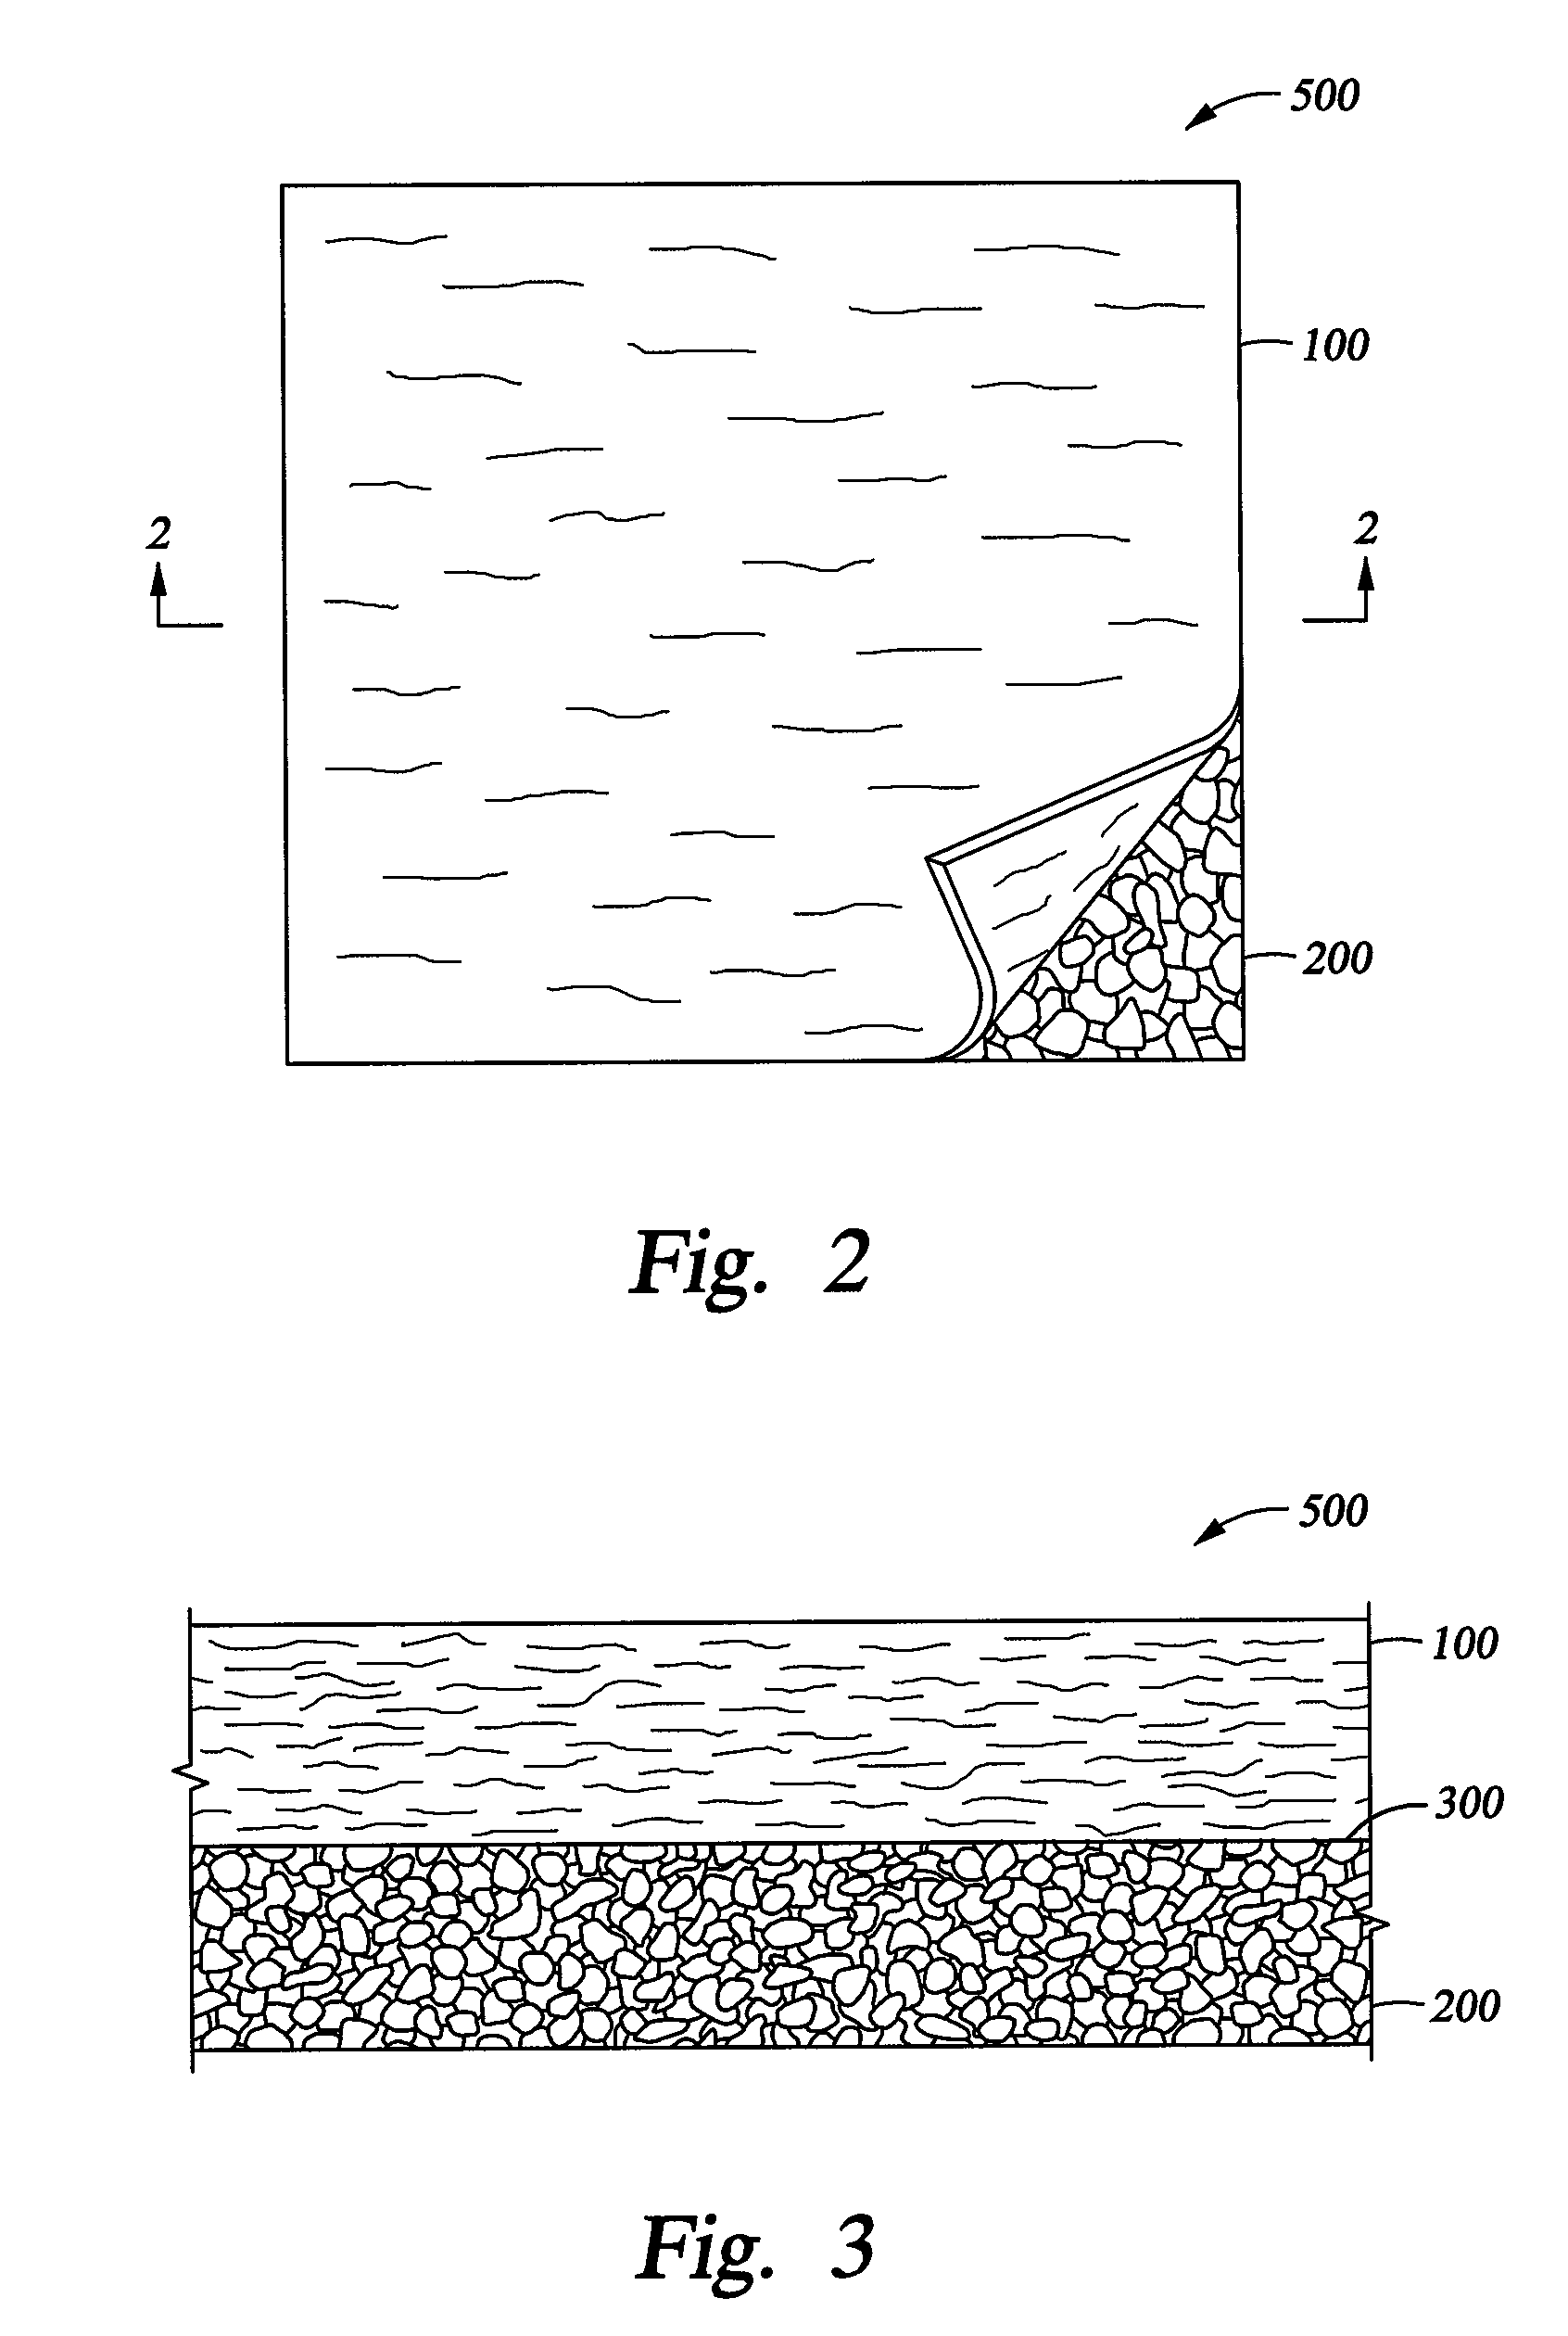 Method for forming bi-layered fiber and foam carpet underlay